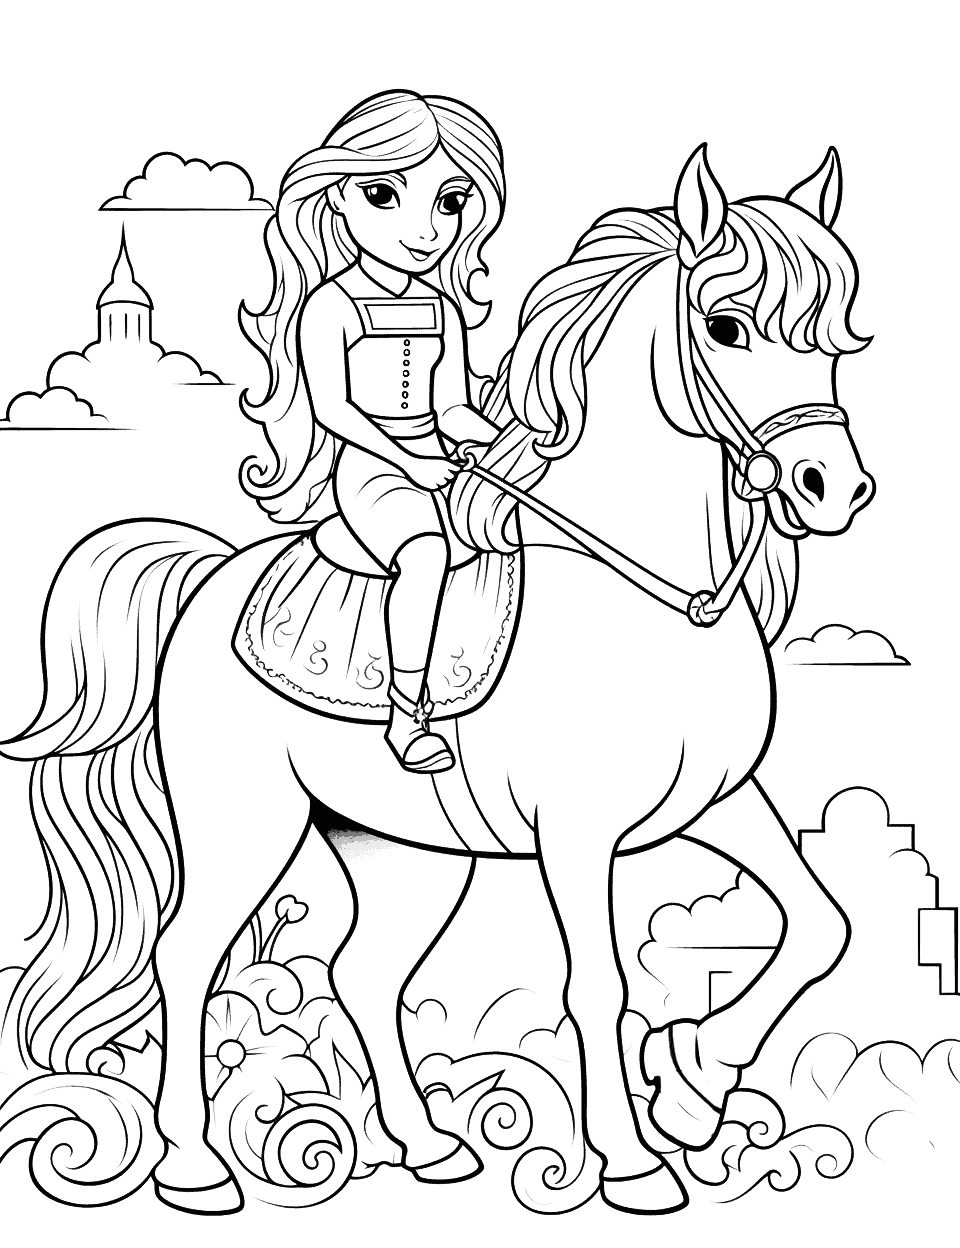 Princess on Unicorn Horse Coloring Page - A fairy tale scene with a princess riding a unicorn across a rainbow.